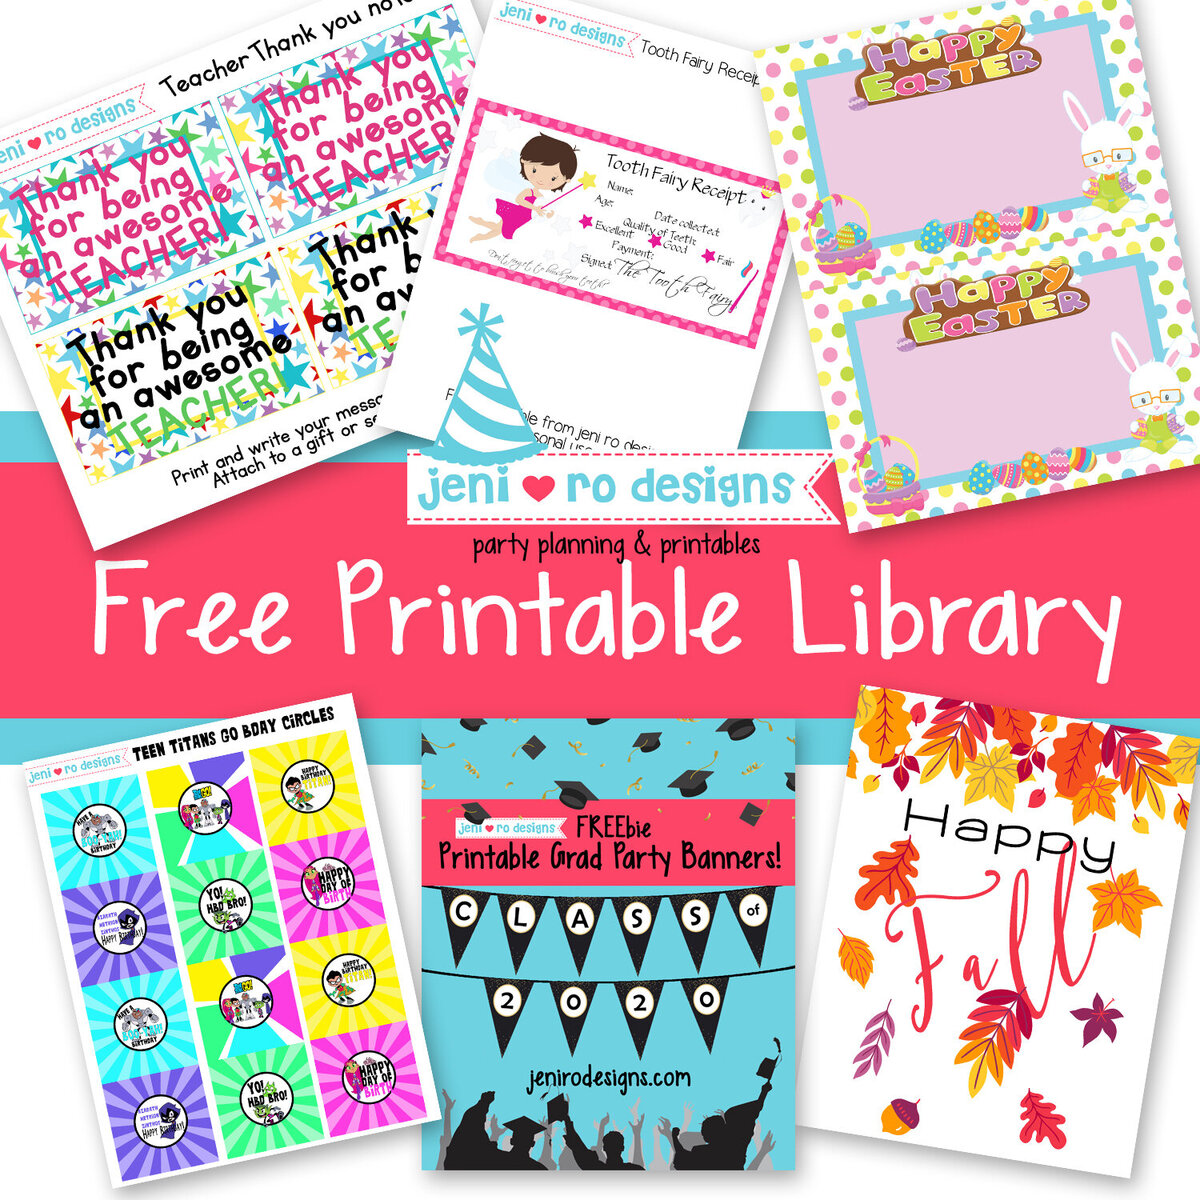 Free printable library